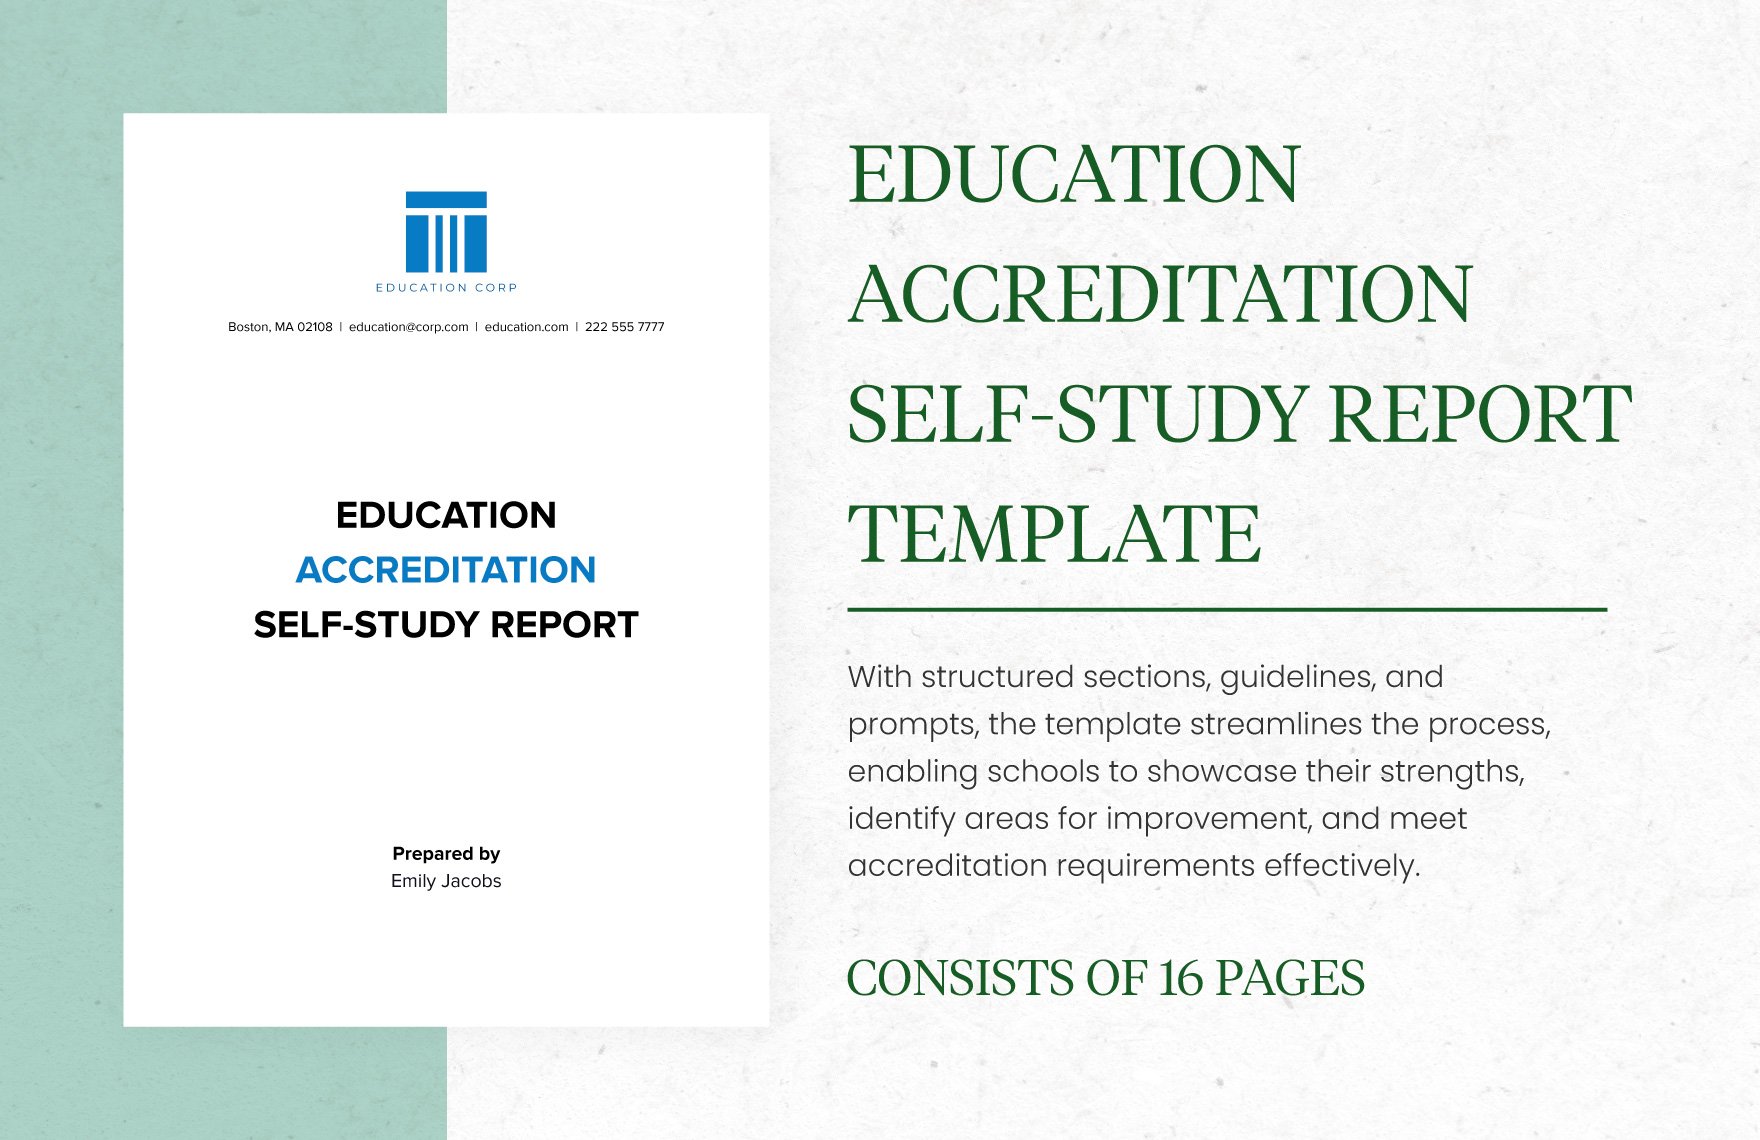 Education Accreditation Self-Study Report Template